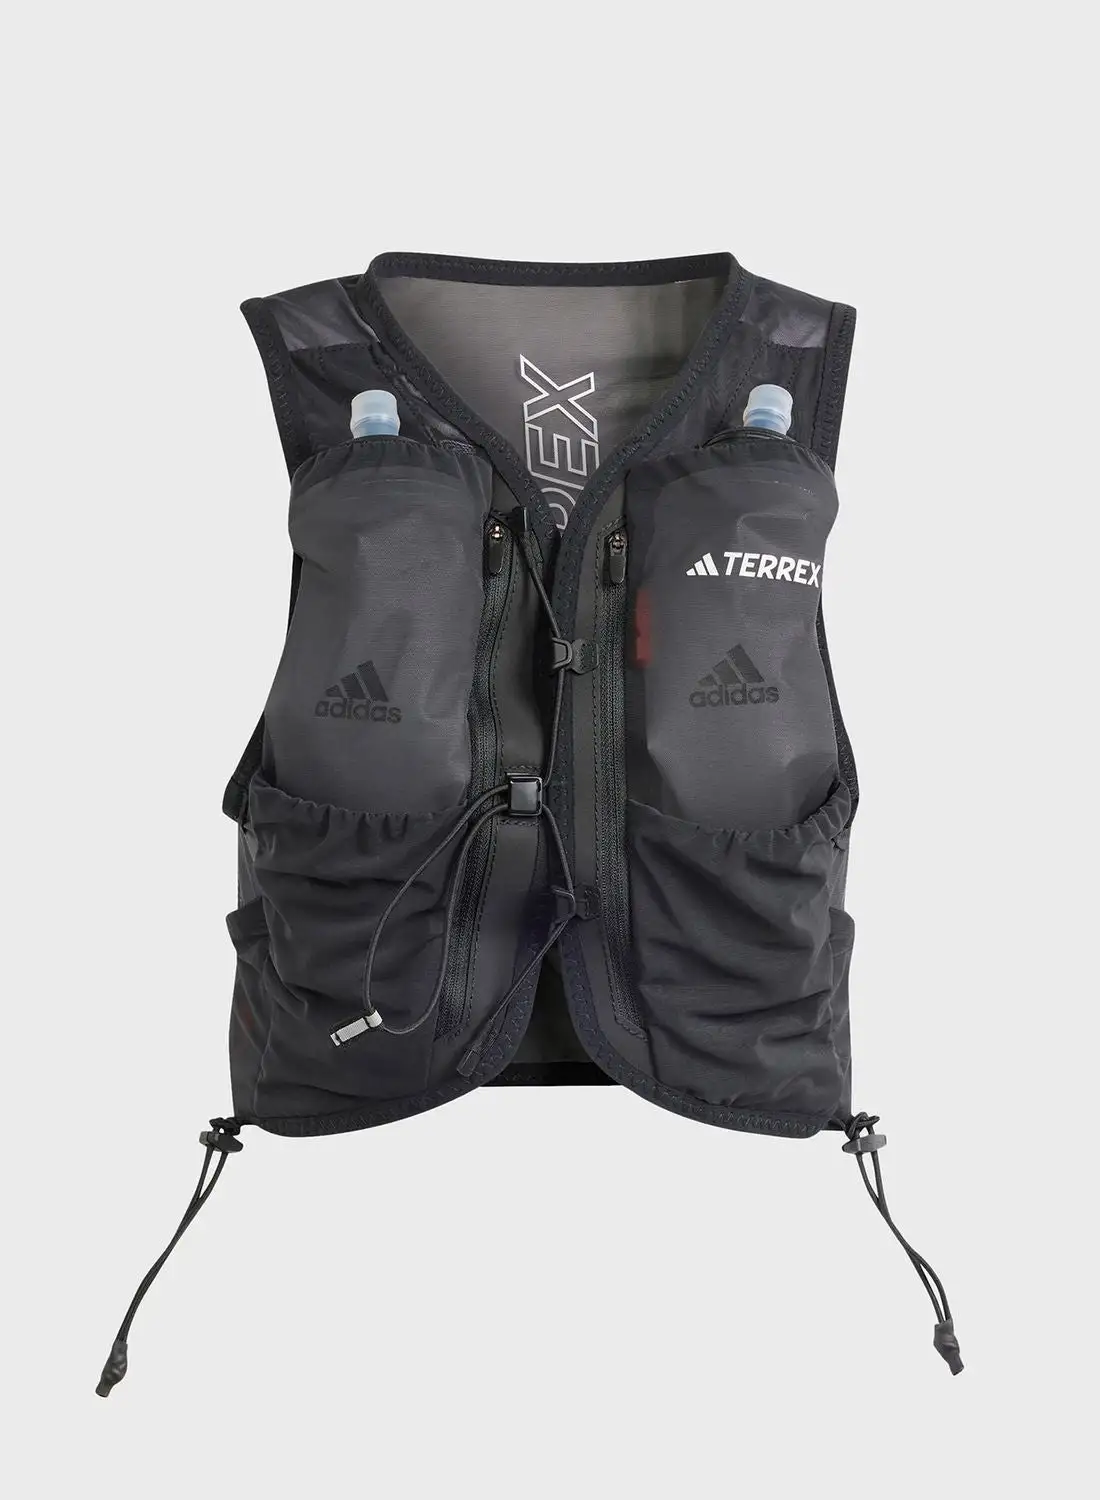 Adidas Terrex Travel Backpack